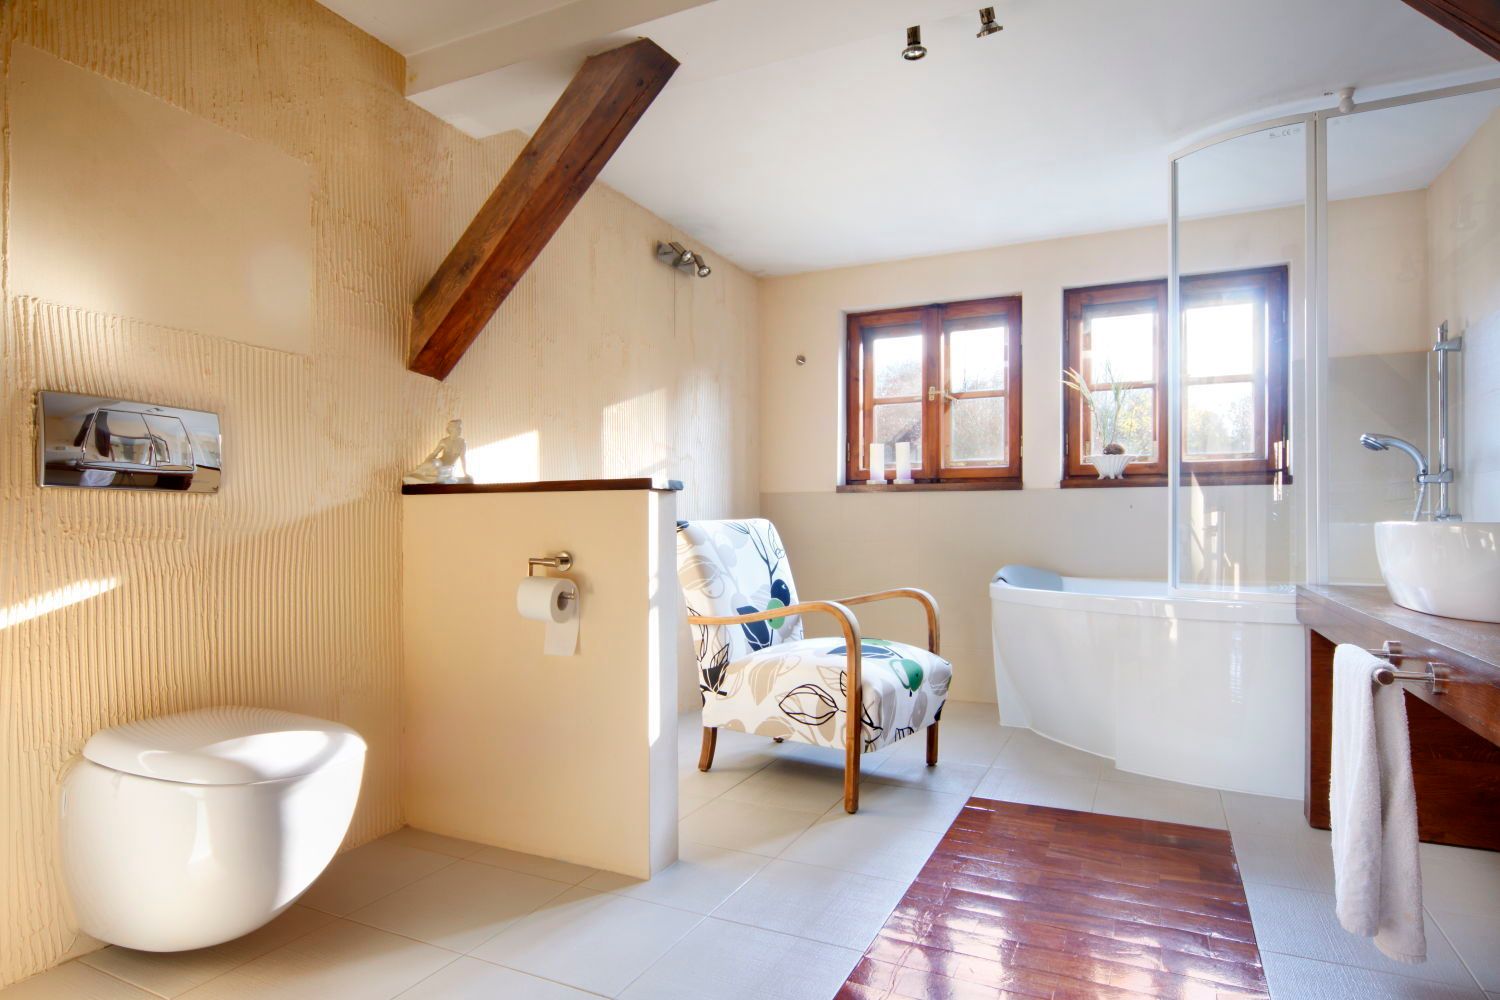 Wiejska chata, Studio Projektowe RoRO interior + design Studio Projektowe RoRO interior + design Country style bathroom